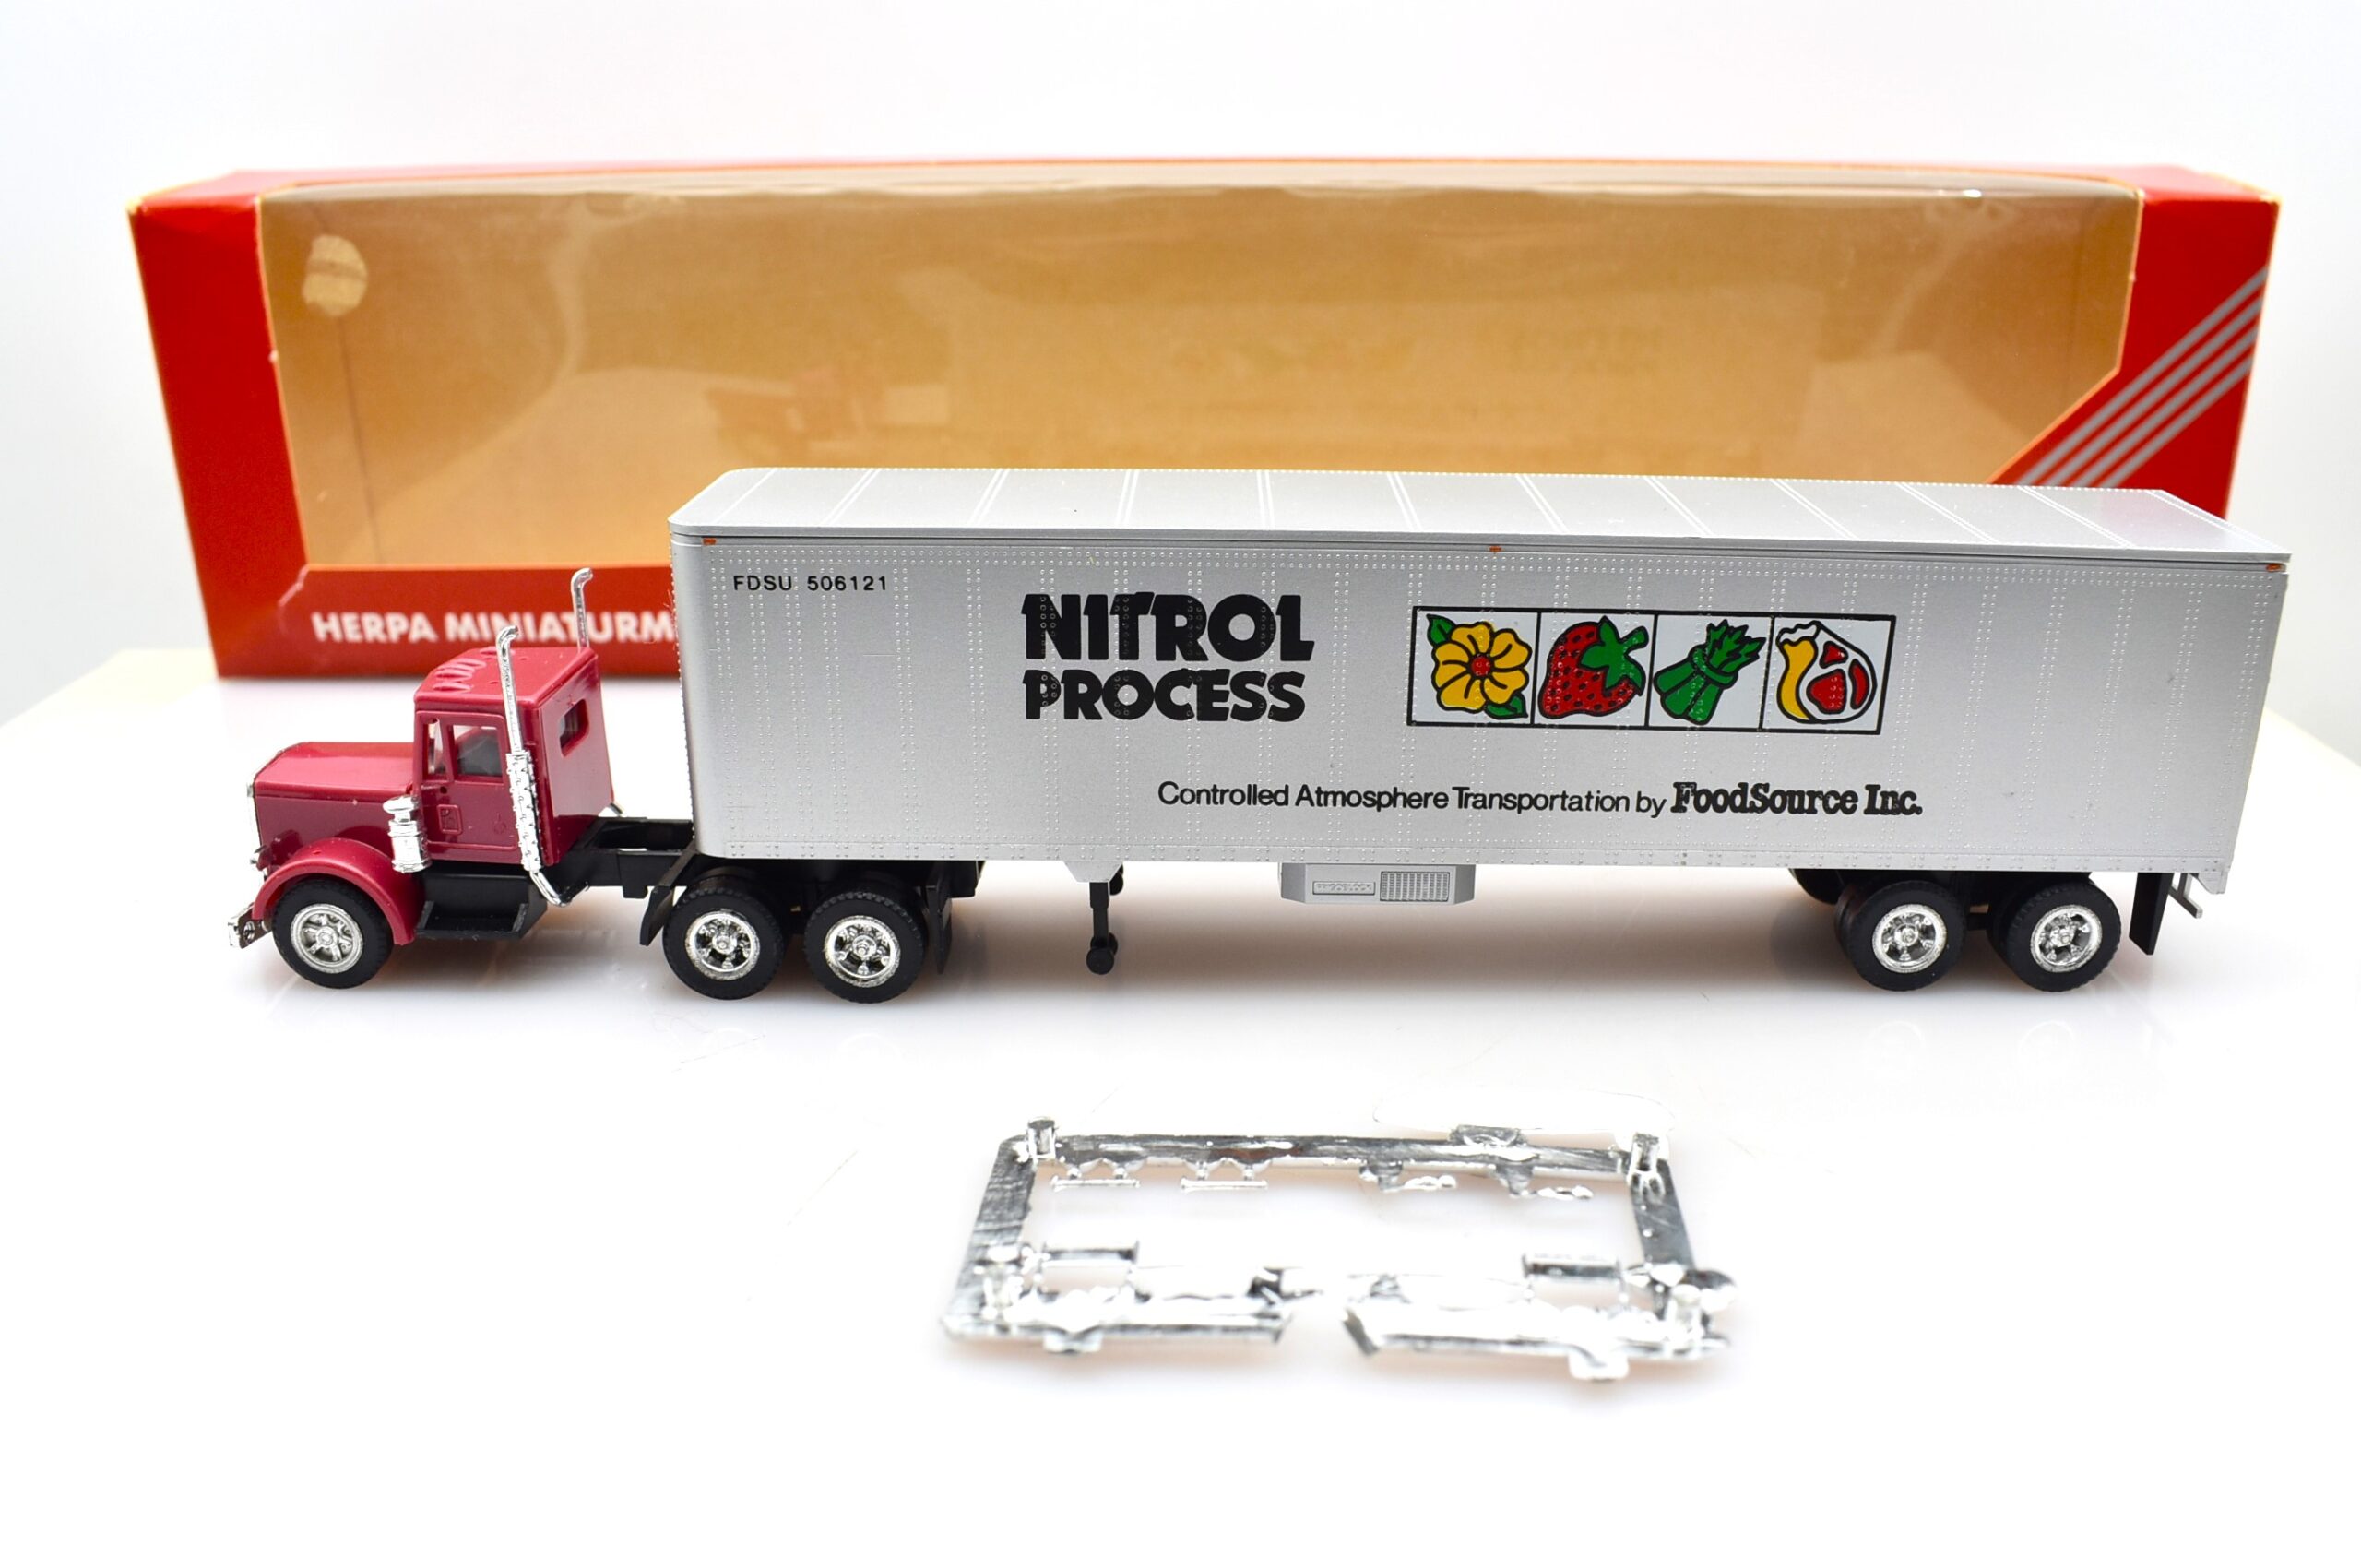 Herpa miniature camion 1:87 auto camion Peterbilt Nitrol Process Food modélisme